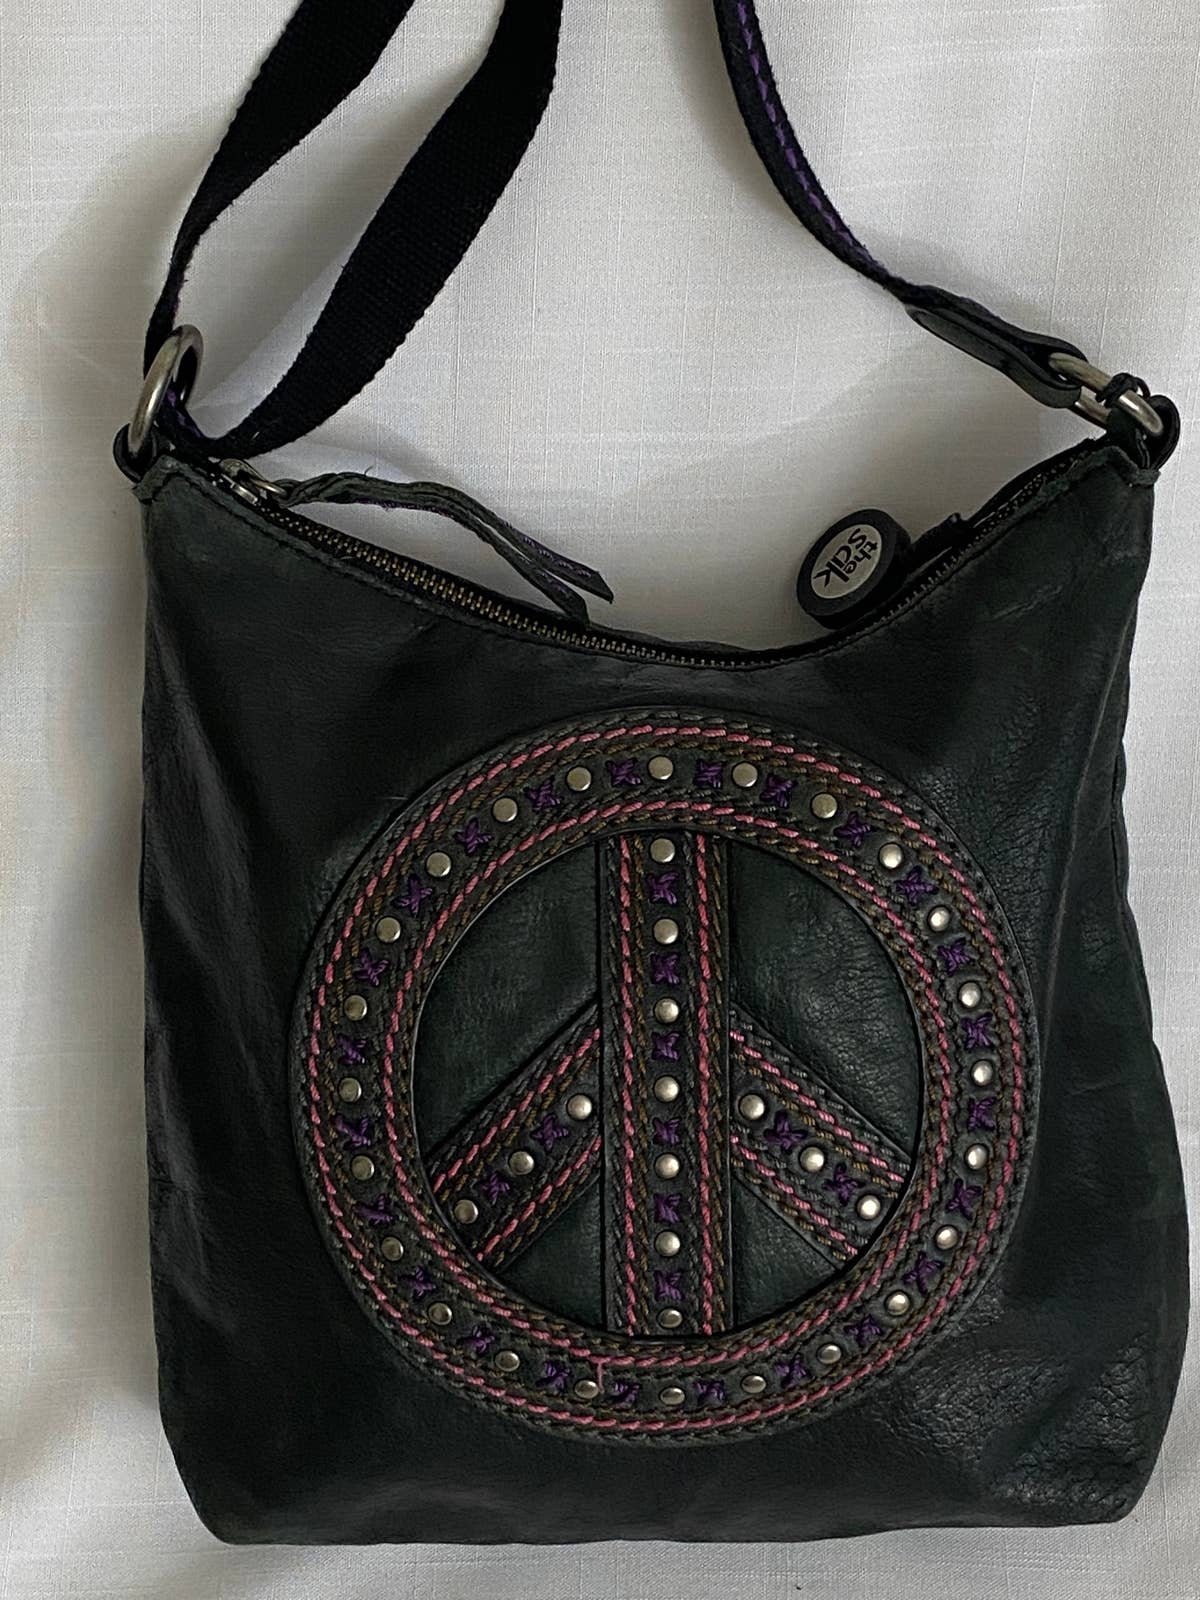 Calvin Klein - Authenticated Handbag - Polyester Beige for Women, Never Worn